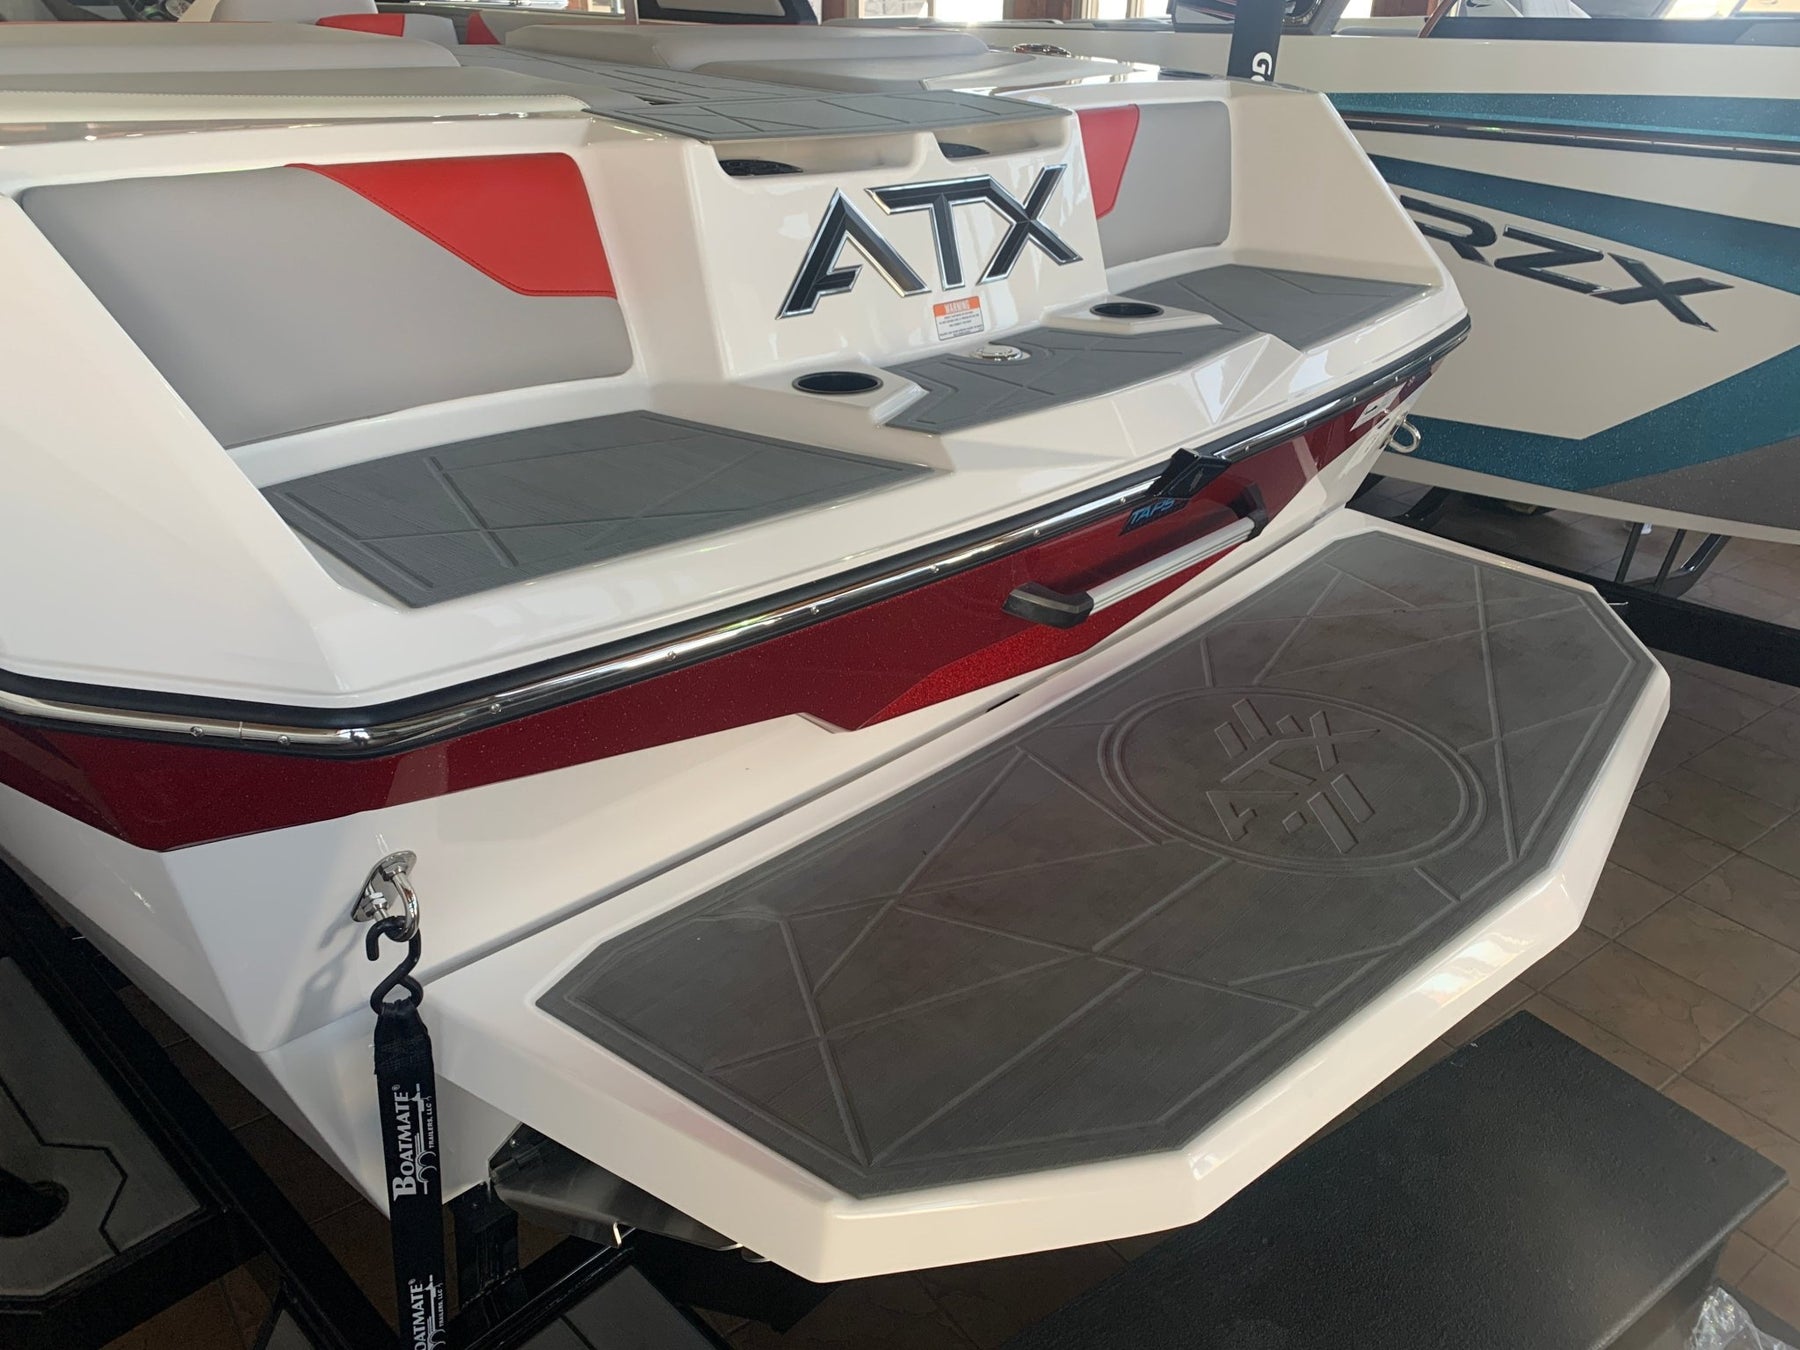 ATX Swim Platform Cover - BoardCo